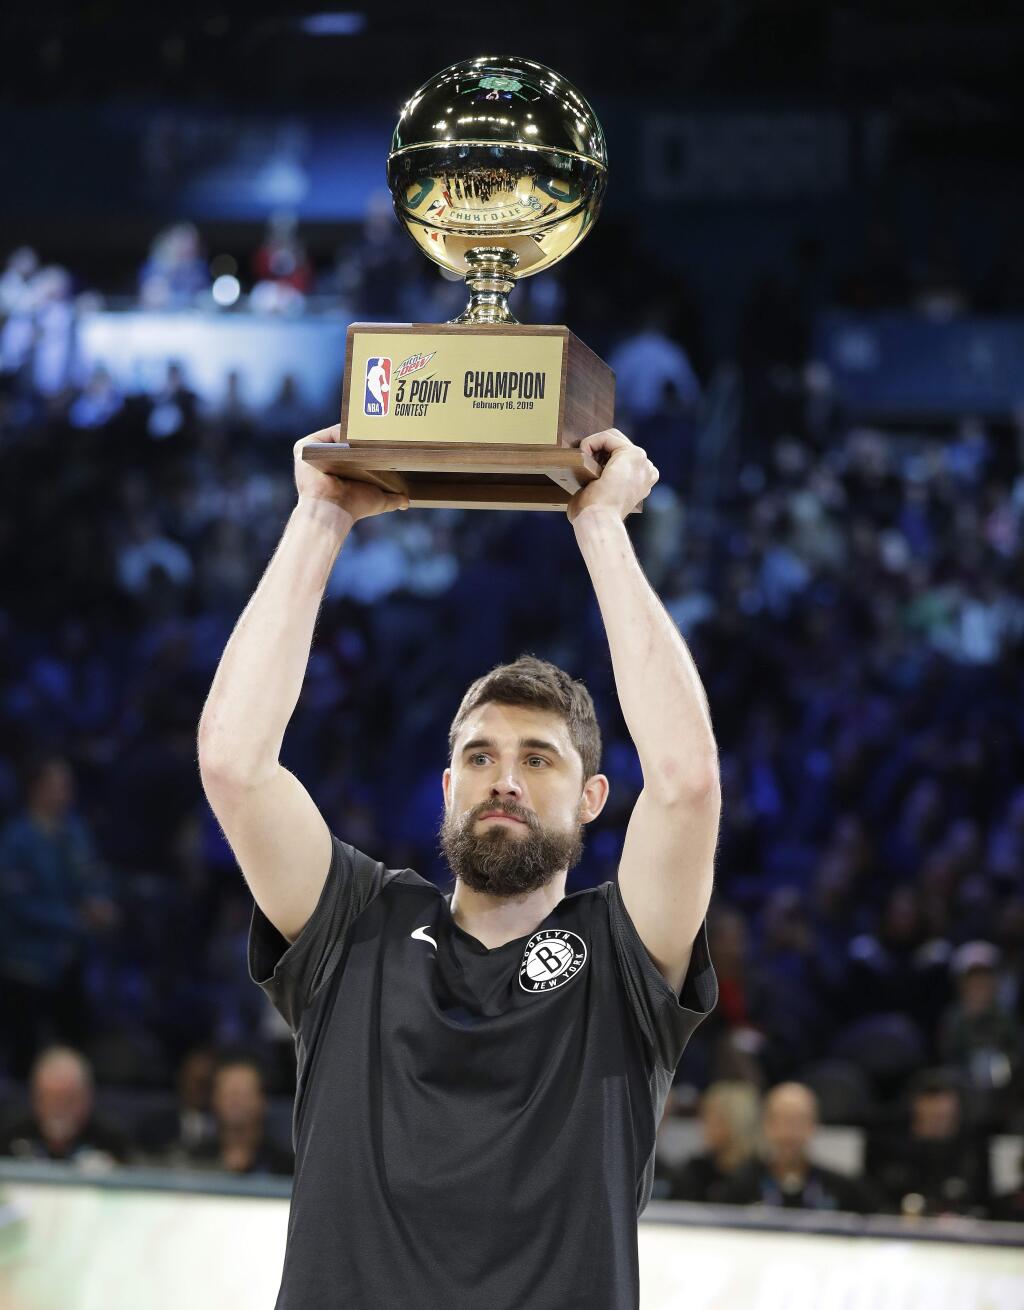 Brooklyn Nets Joe Harris holds the champion trophy after winning the NBA All-Star 3-Point contest, Saturday, Feb. 16, 2019, in Charlotte, N.C. (AP Photo/Chuck Burton)